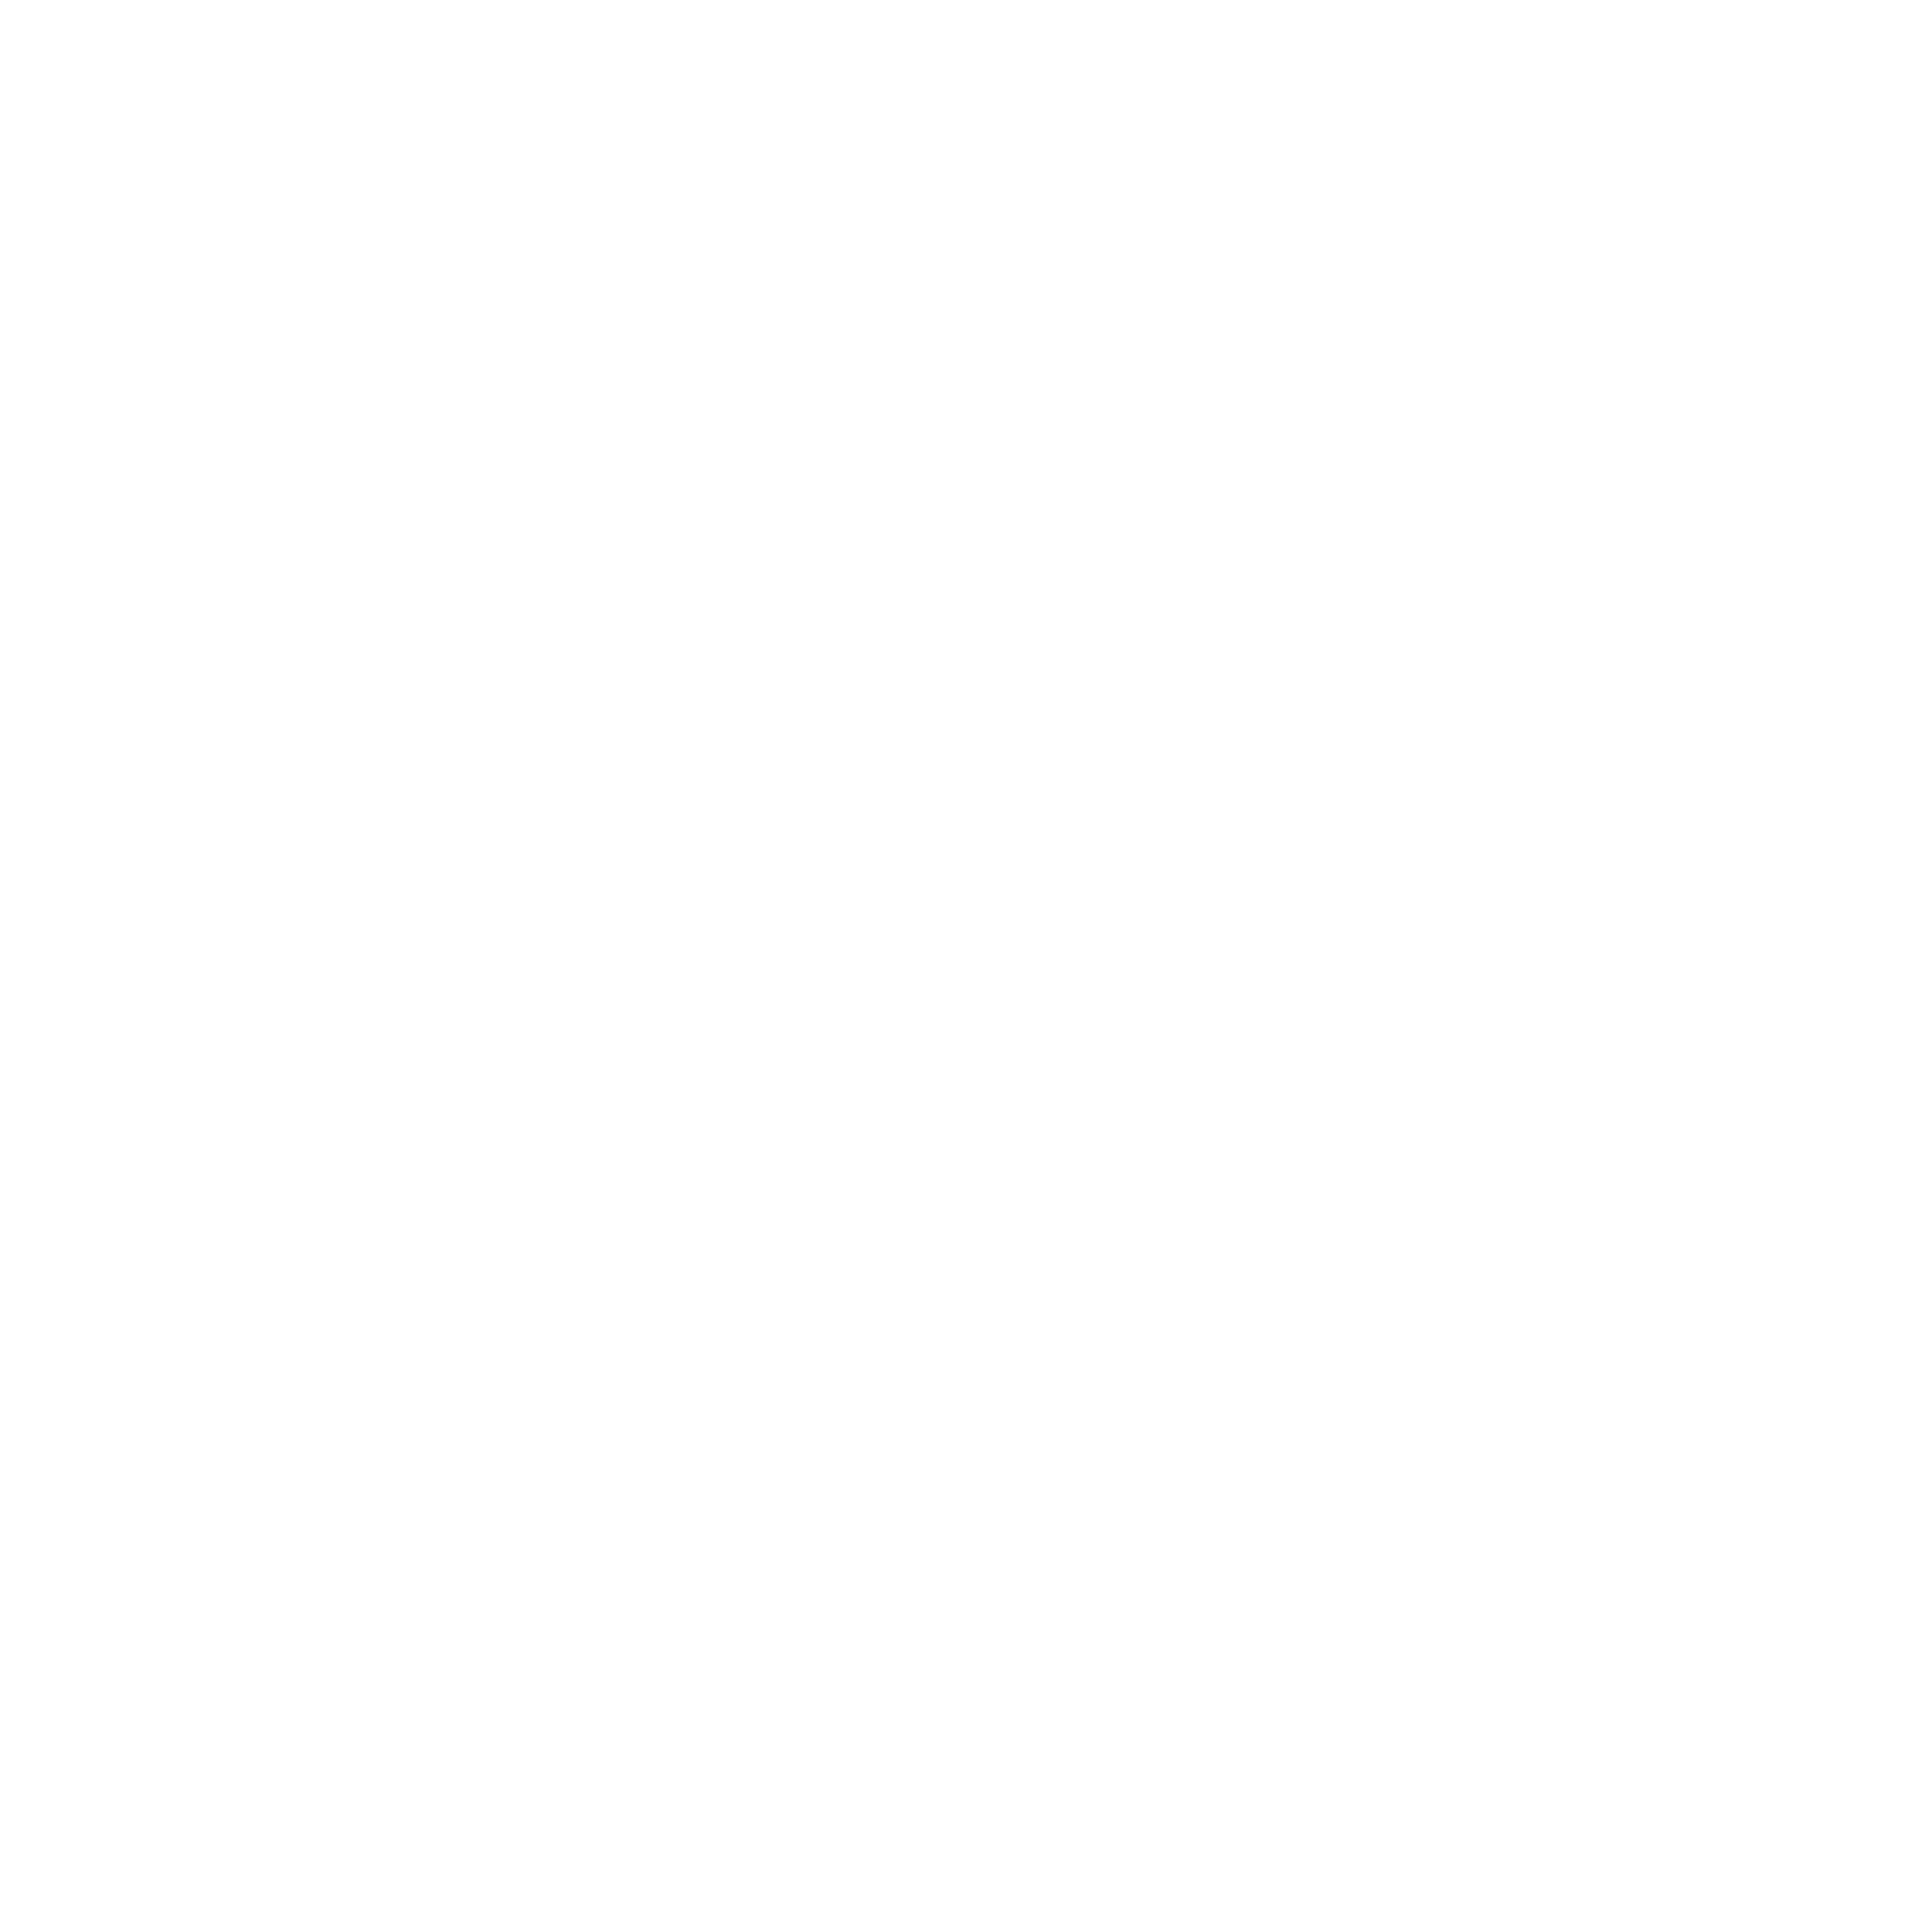 Diego Mesa Ministries